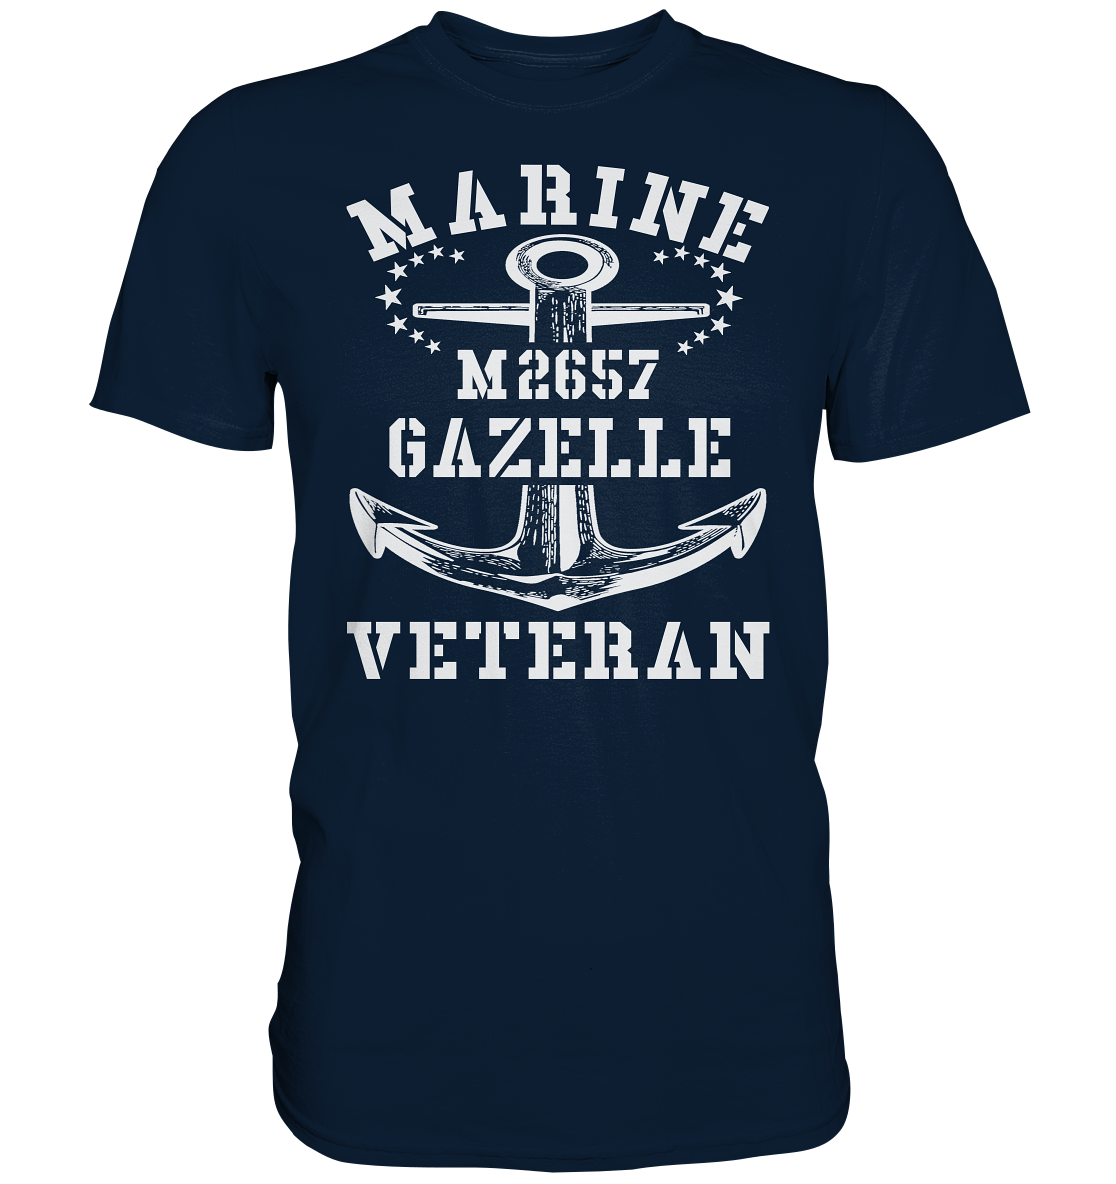 BiMi M2657 GAZELLE Marine Veteran - Premium Shirt